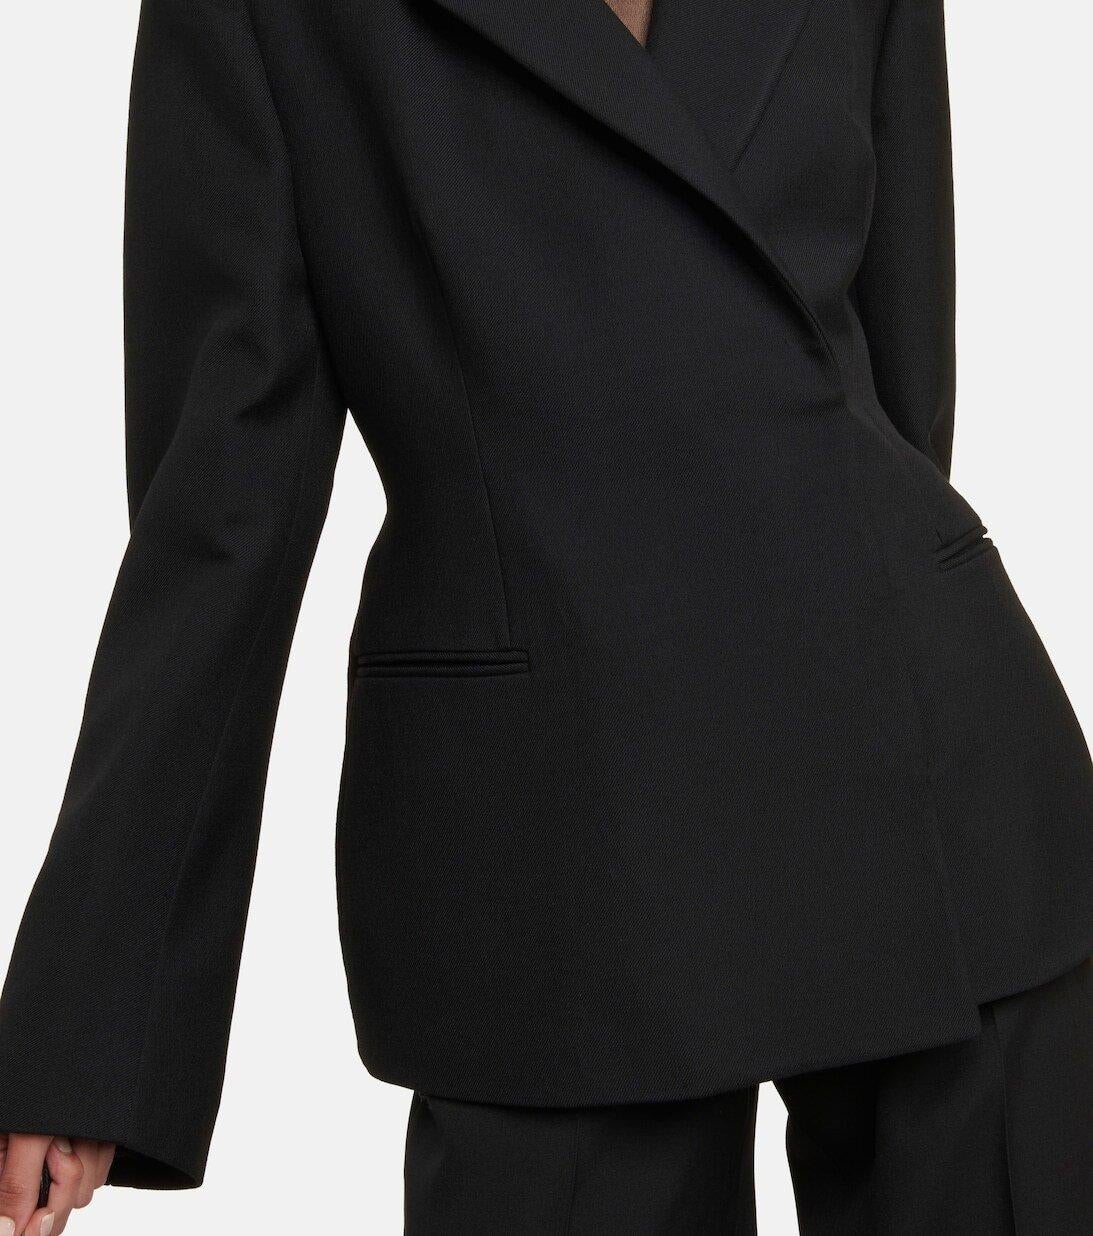 ALAIA black wool gaberdine A TAILORED Blazer Jacket 42 L For Sale 6